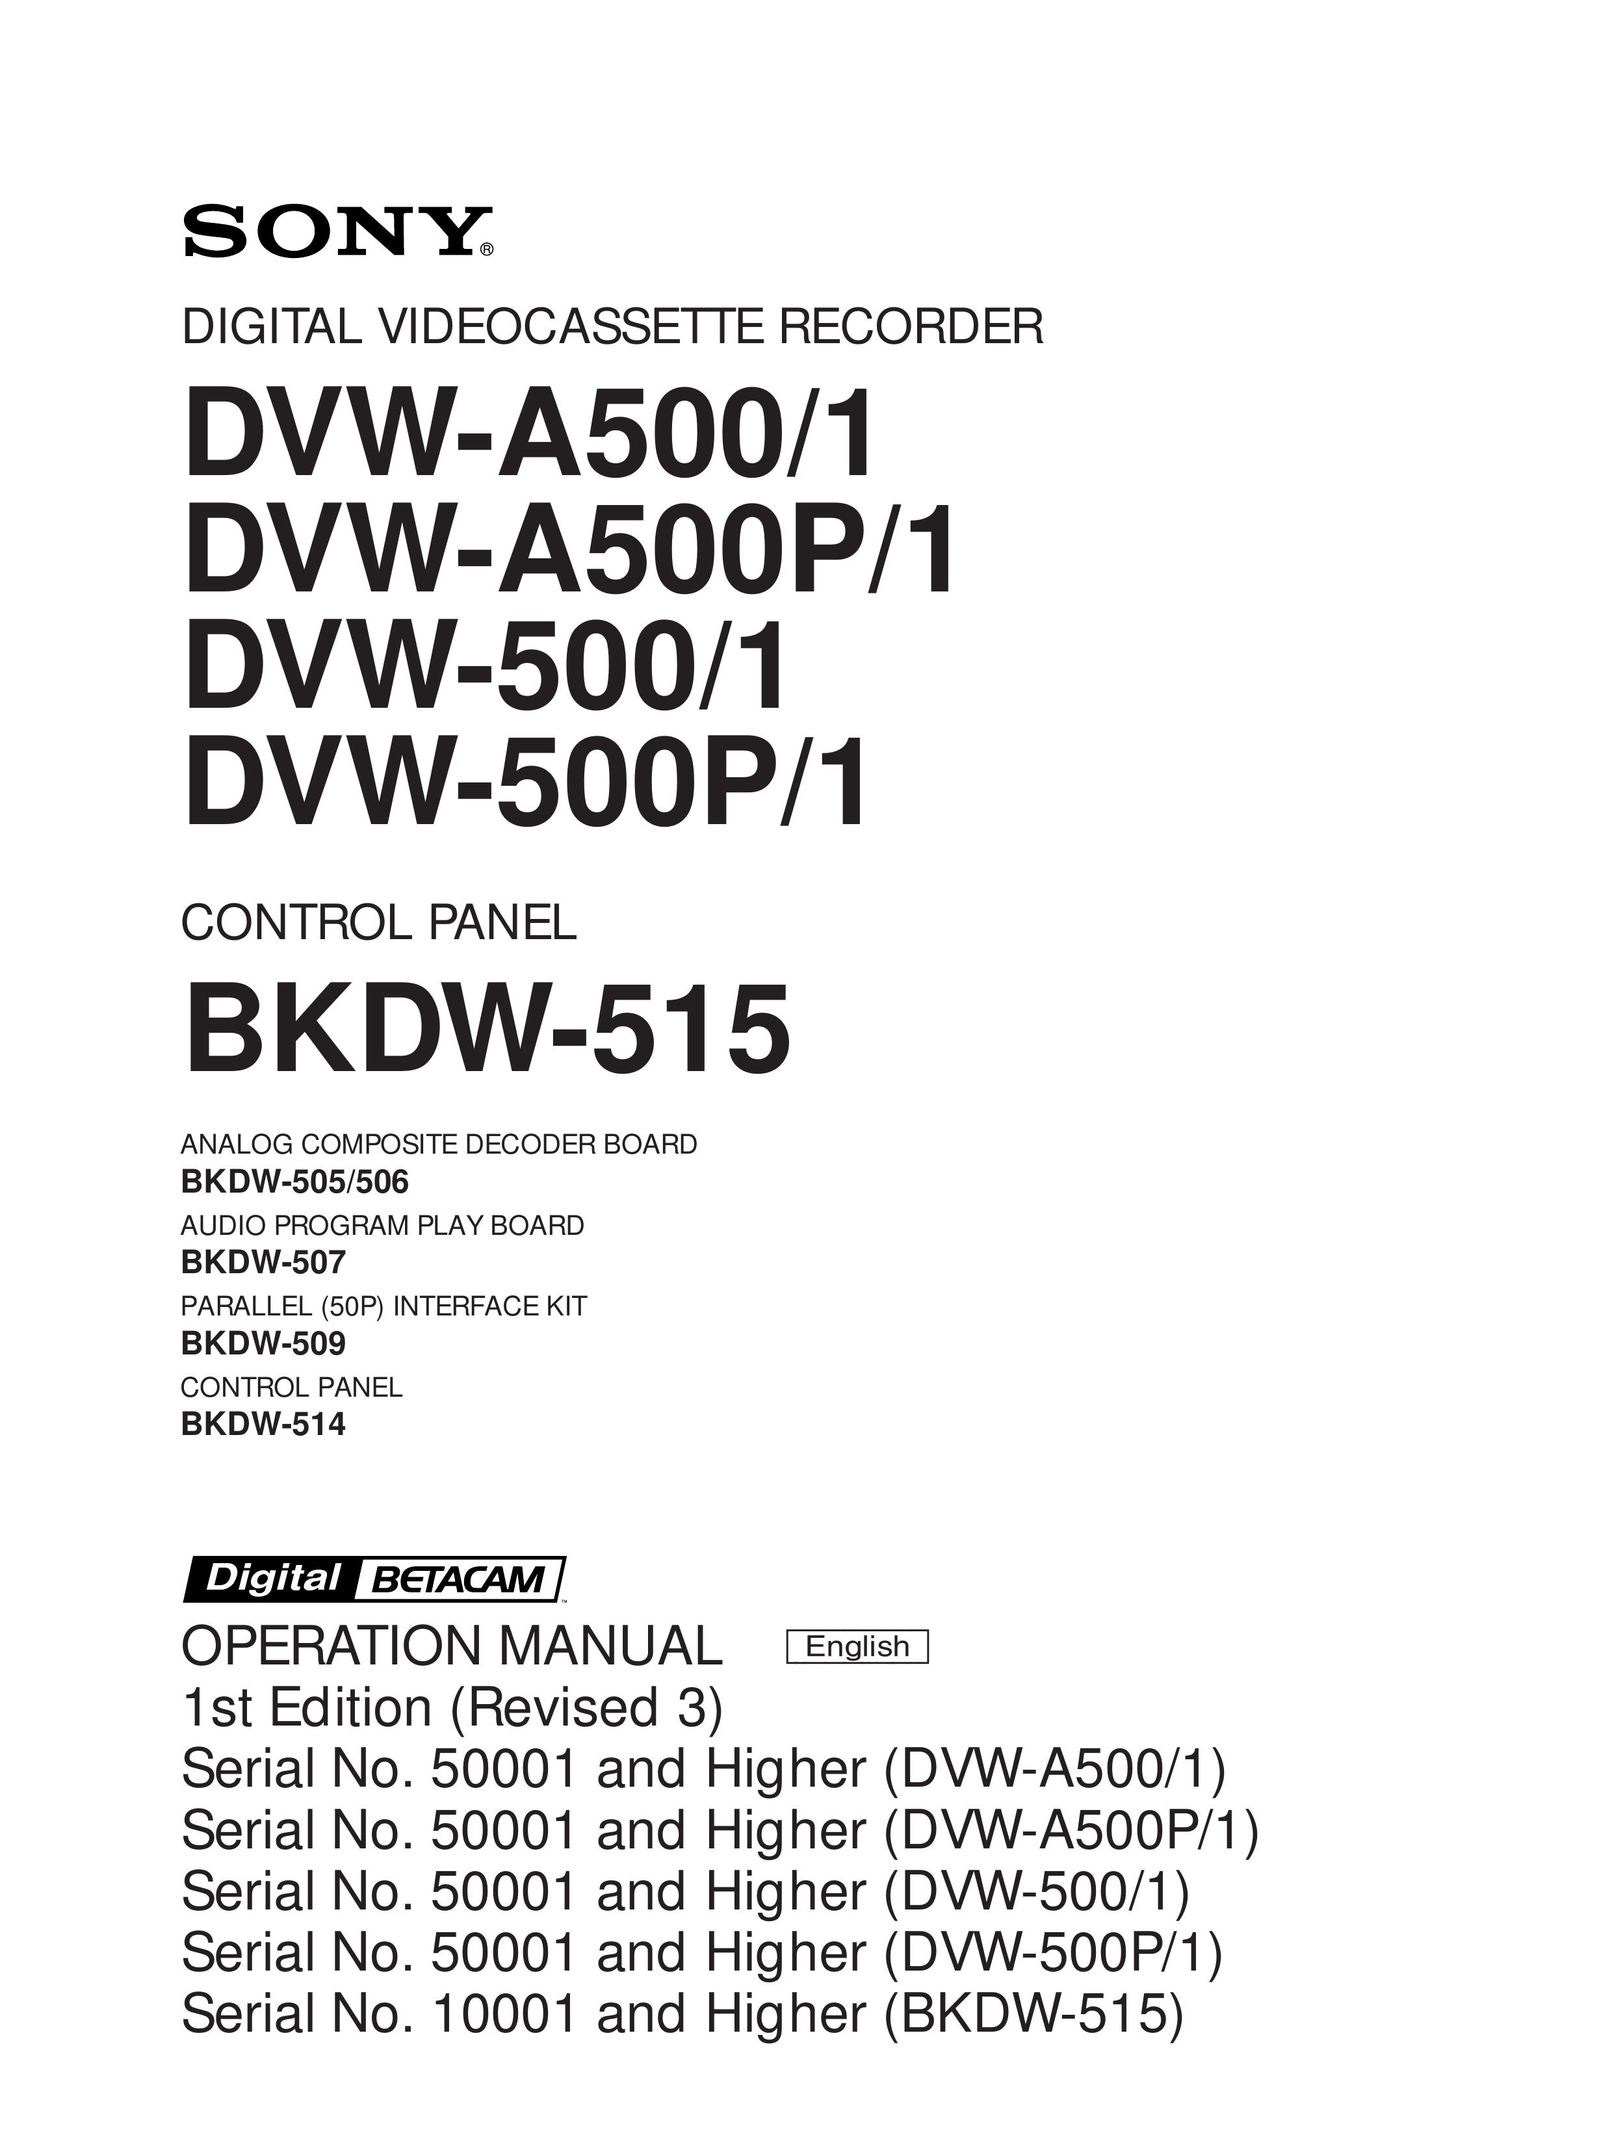 Sony DVW-A500P/1 DVR User Manual